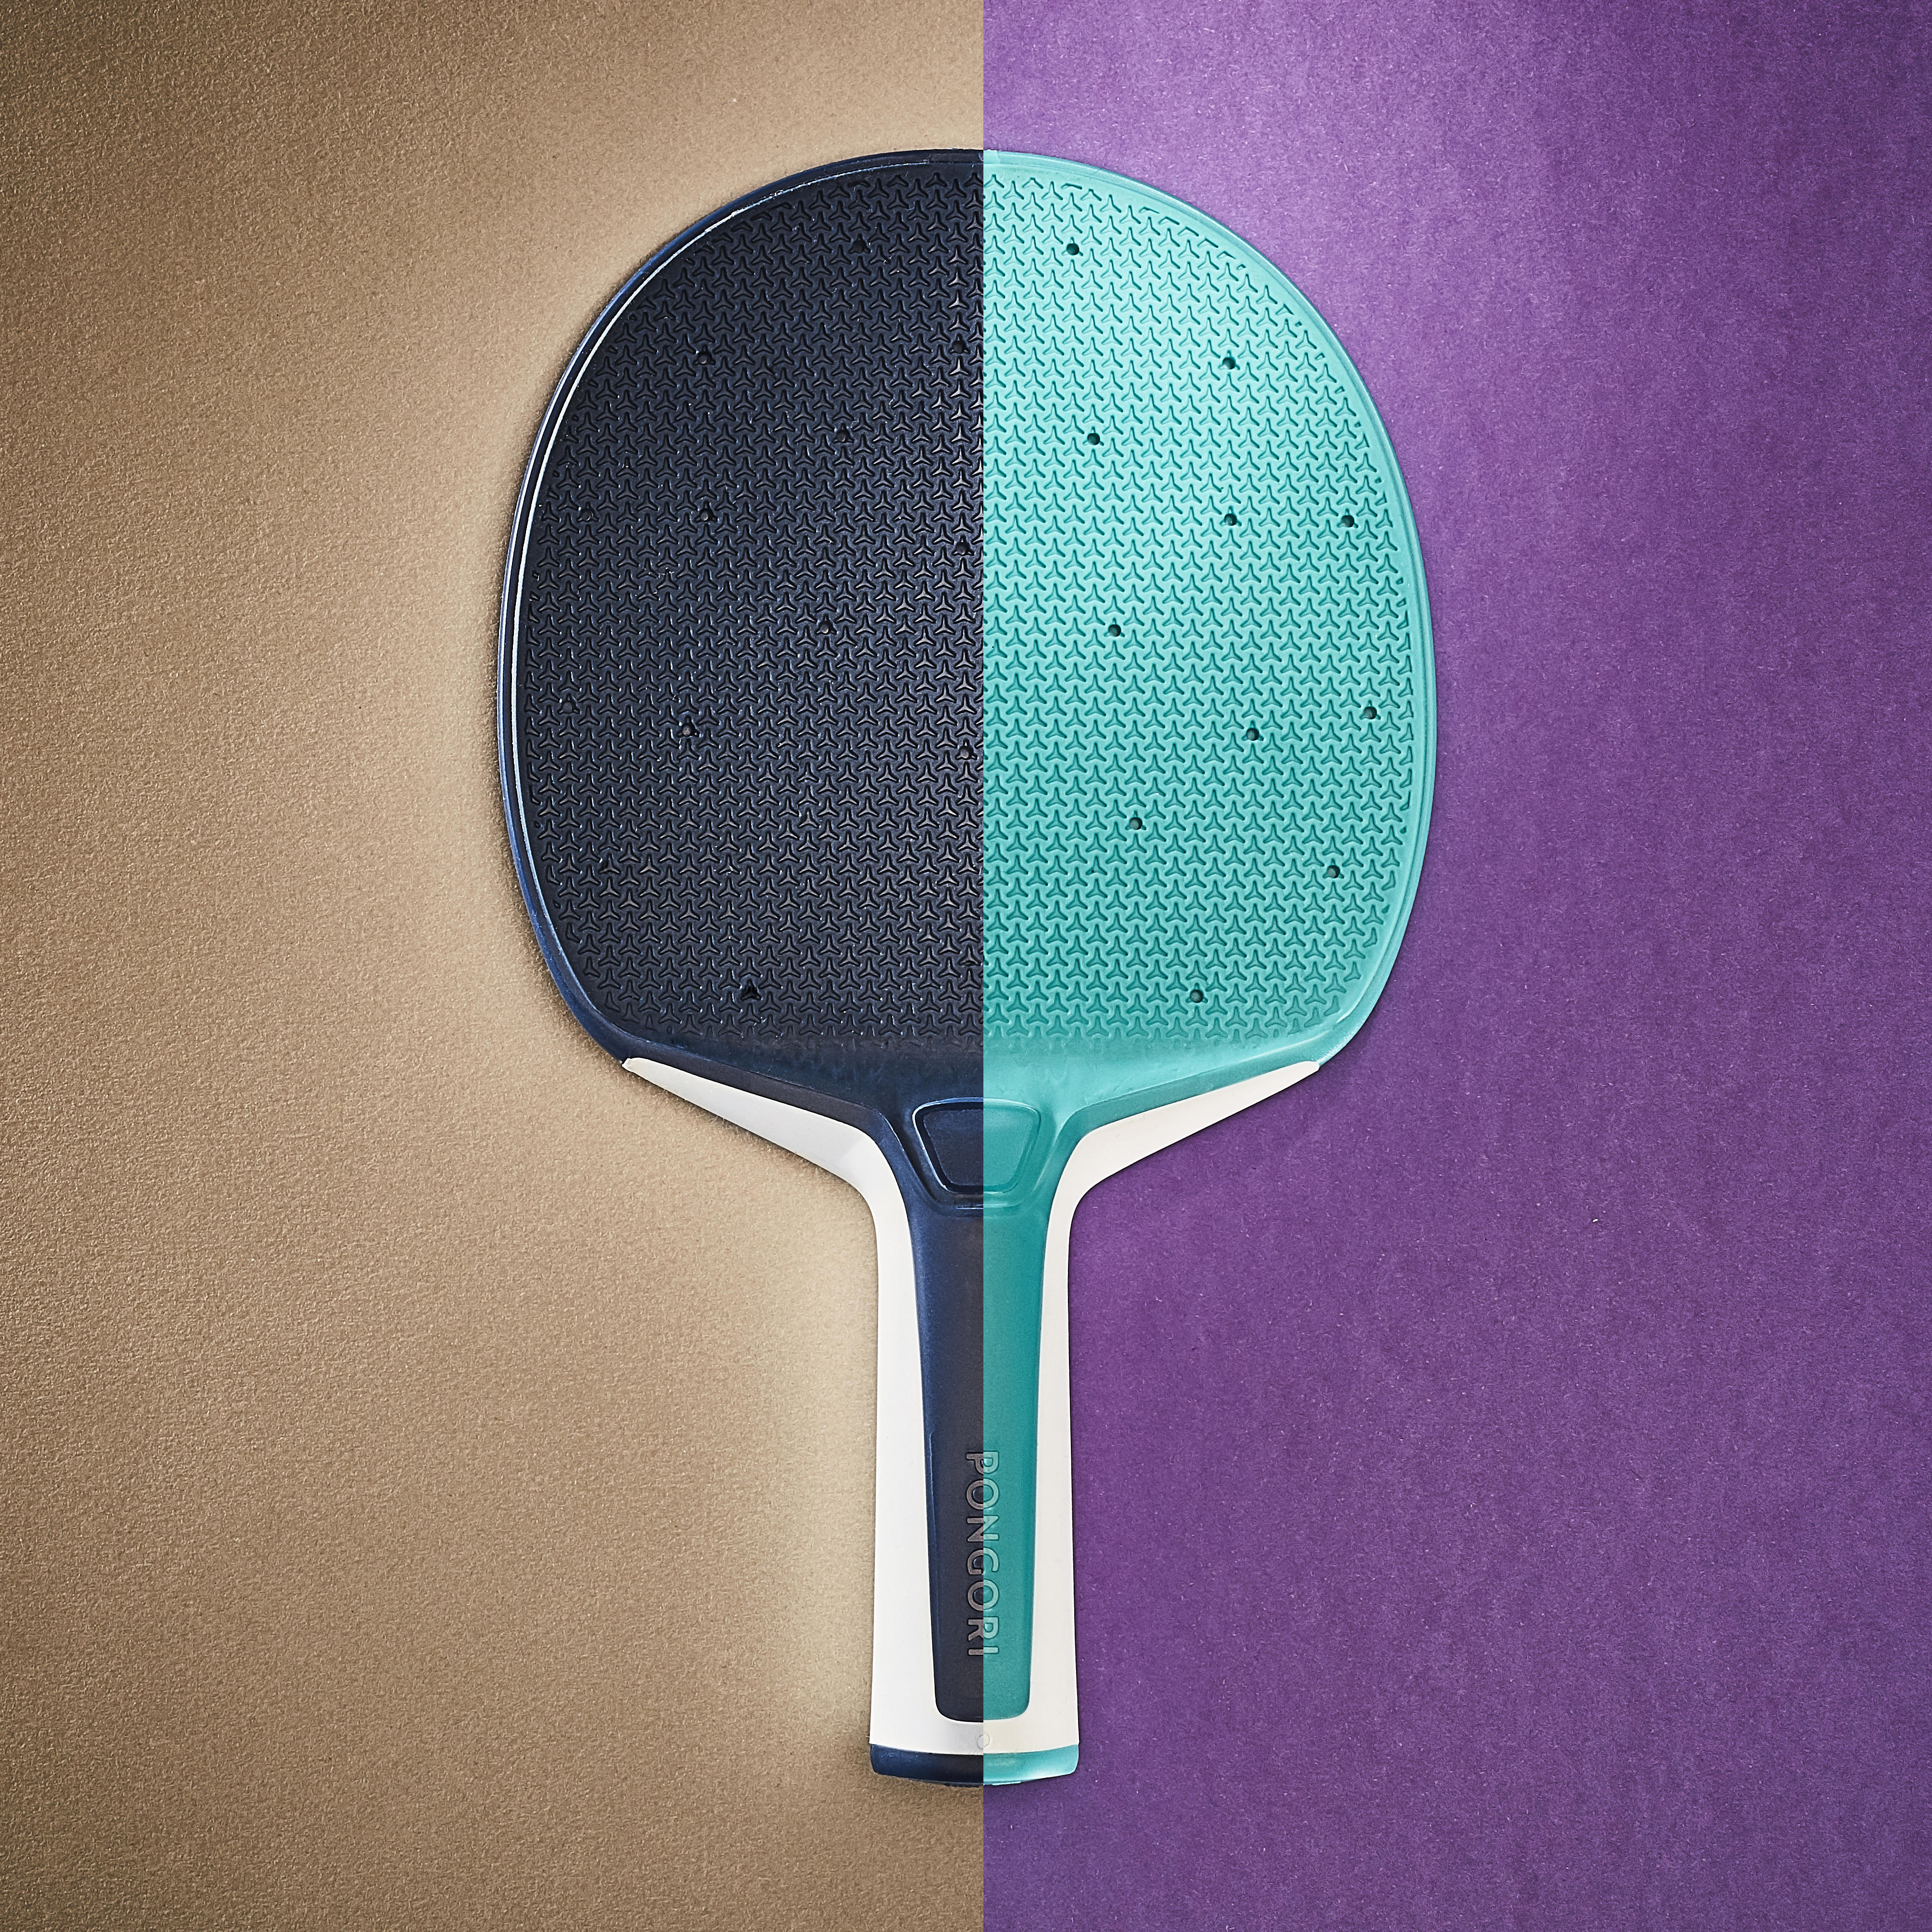 Table tennis paddles and balls PPR 130 - PONGORI